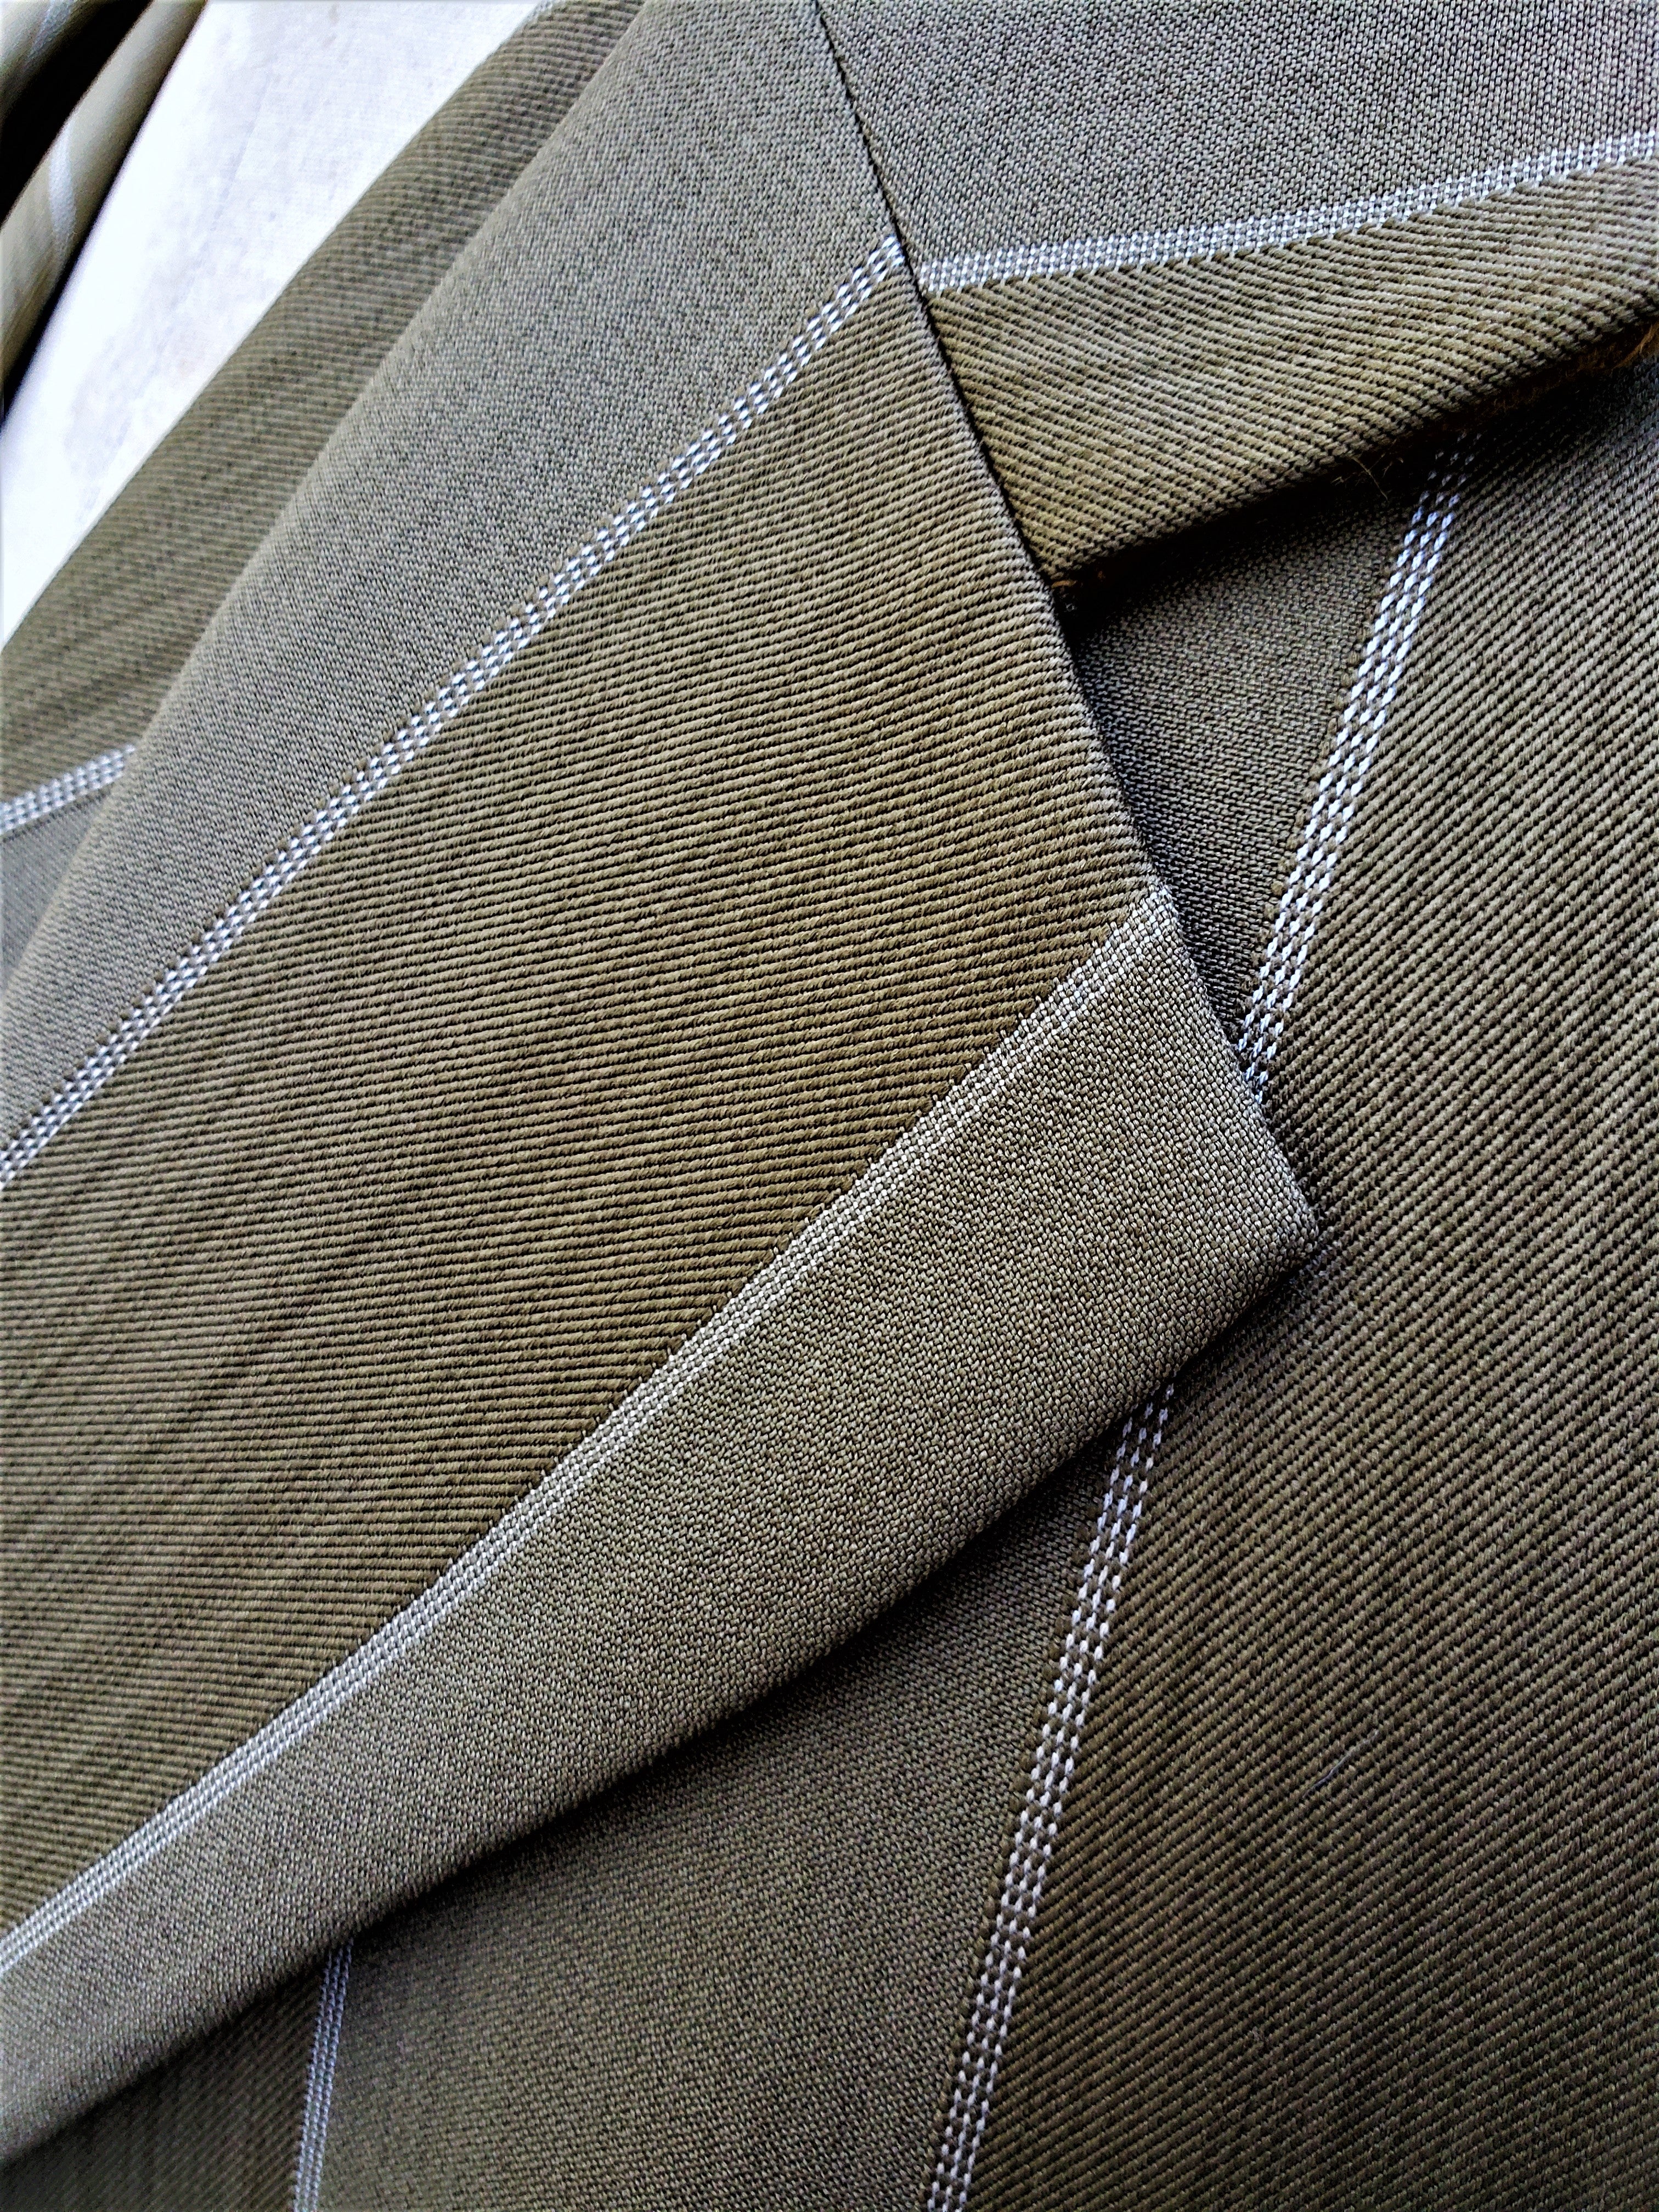 Pinstripe Stylish 3pc  Long Zoot Suit Set - Olive